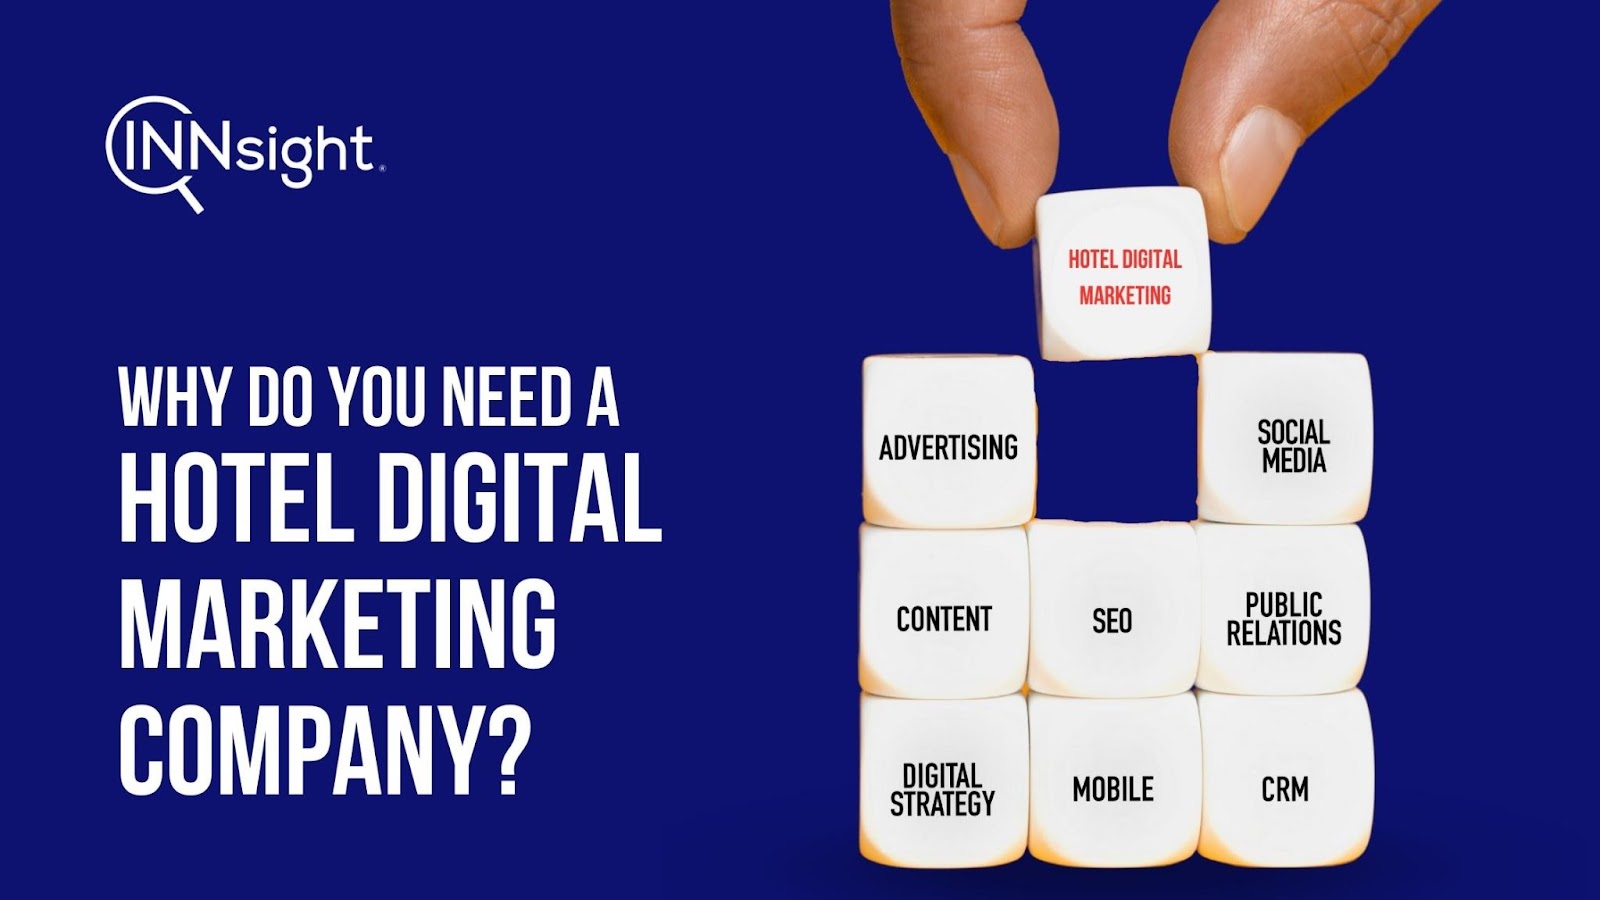 Why do hotels need a digital marketing company